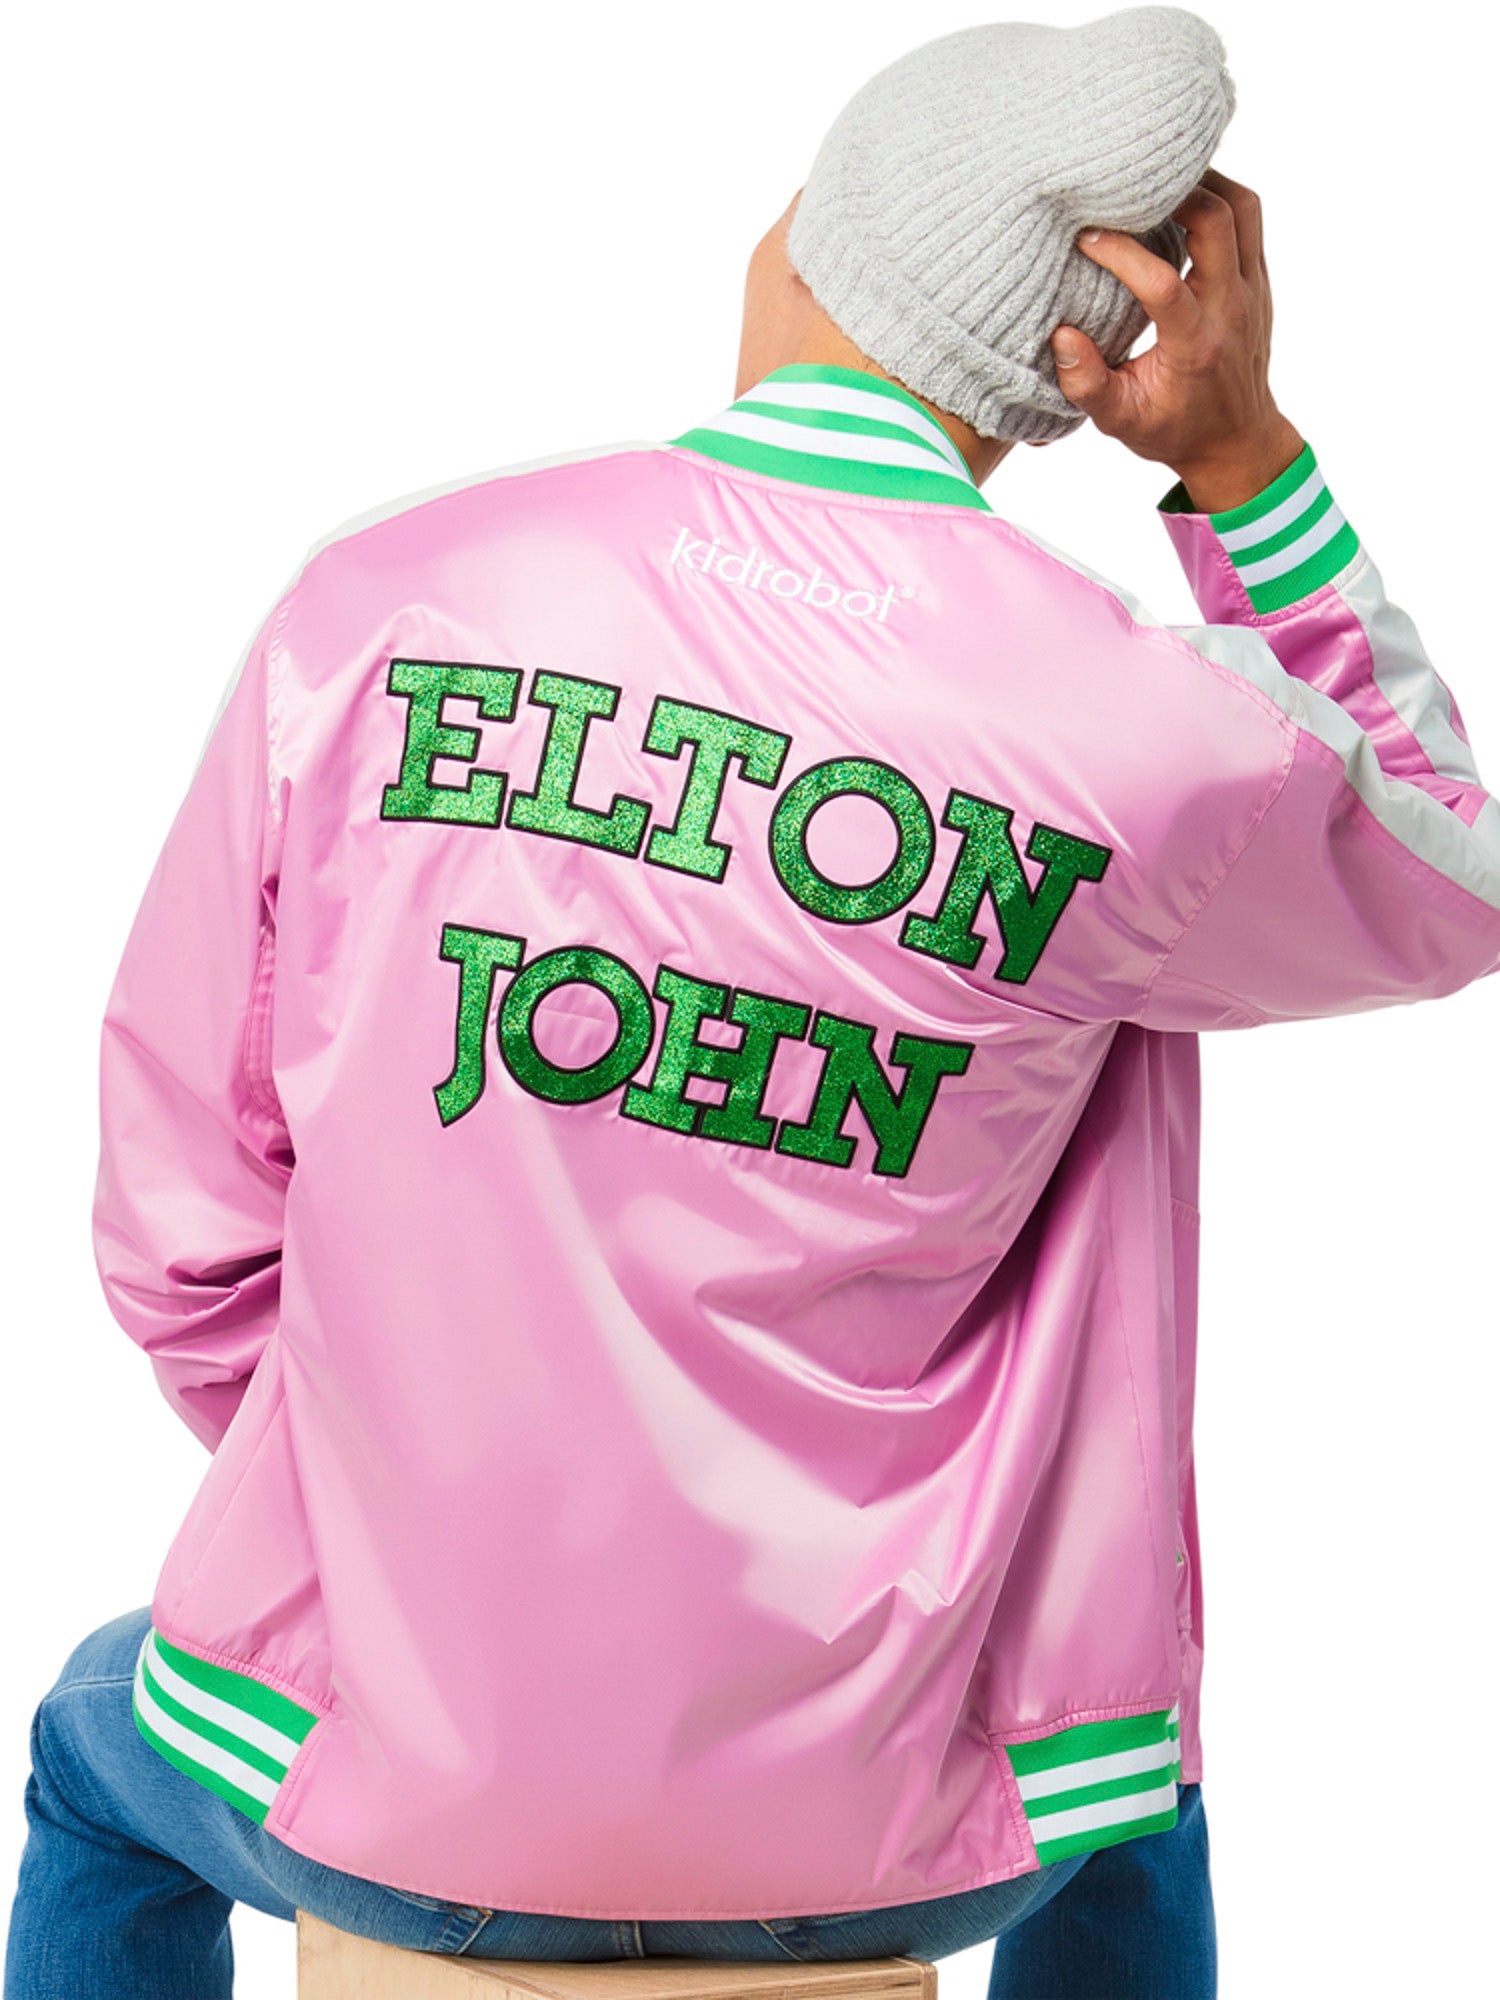 Kidrobot - Elton John "Goodbye Yellow Brick Road" Pink Satin Jacket - Medium - costumes.com